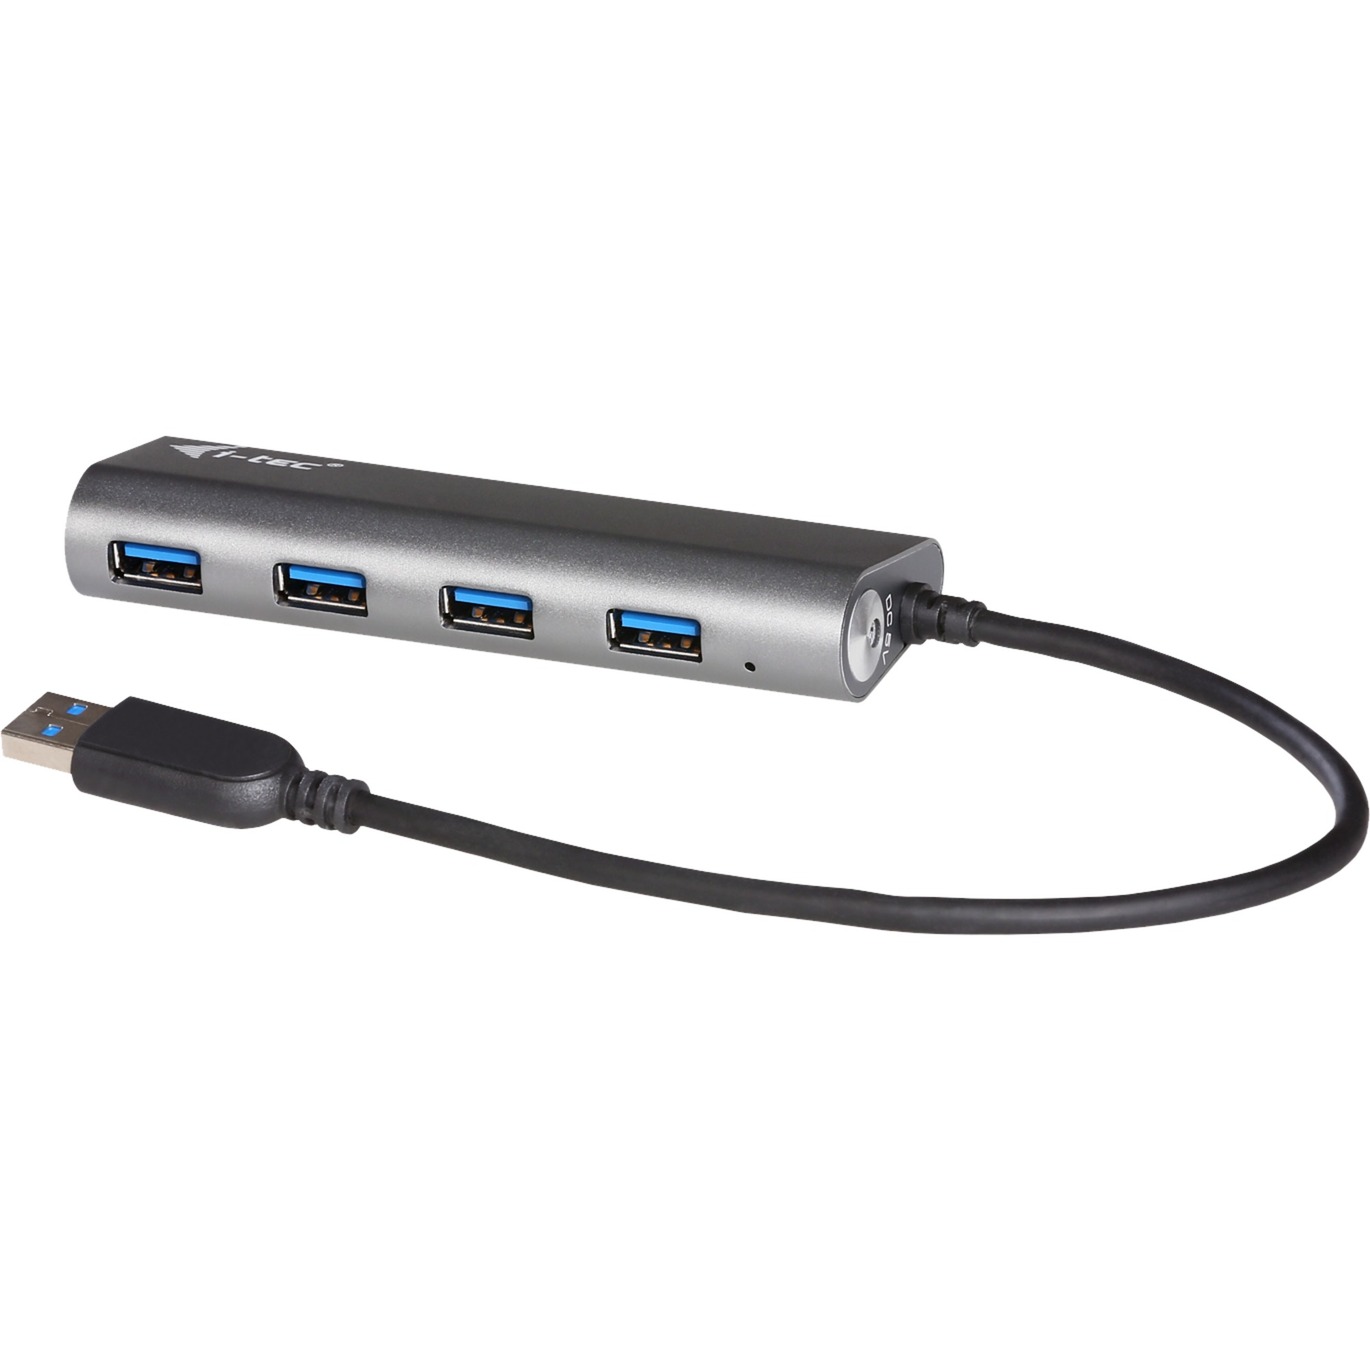 Image of Alternate - USB 3.0 Metal Charging HUB 4 Port, USB-Hub online einkaufen bei Alternate